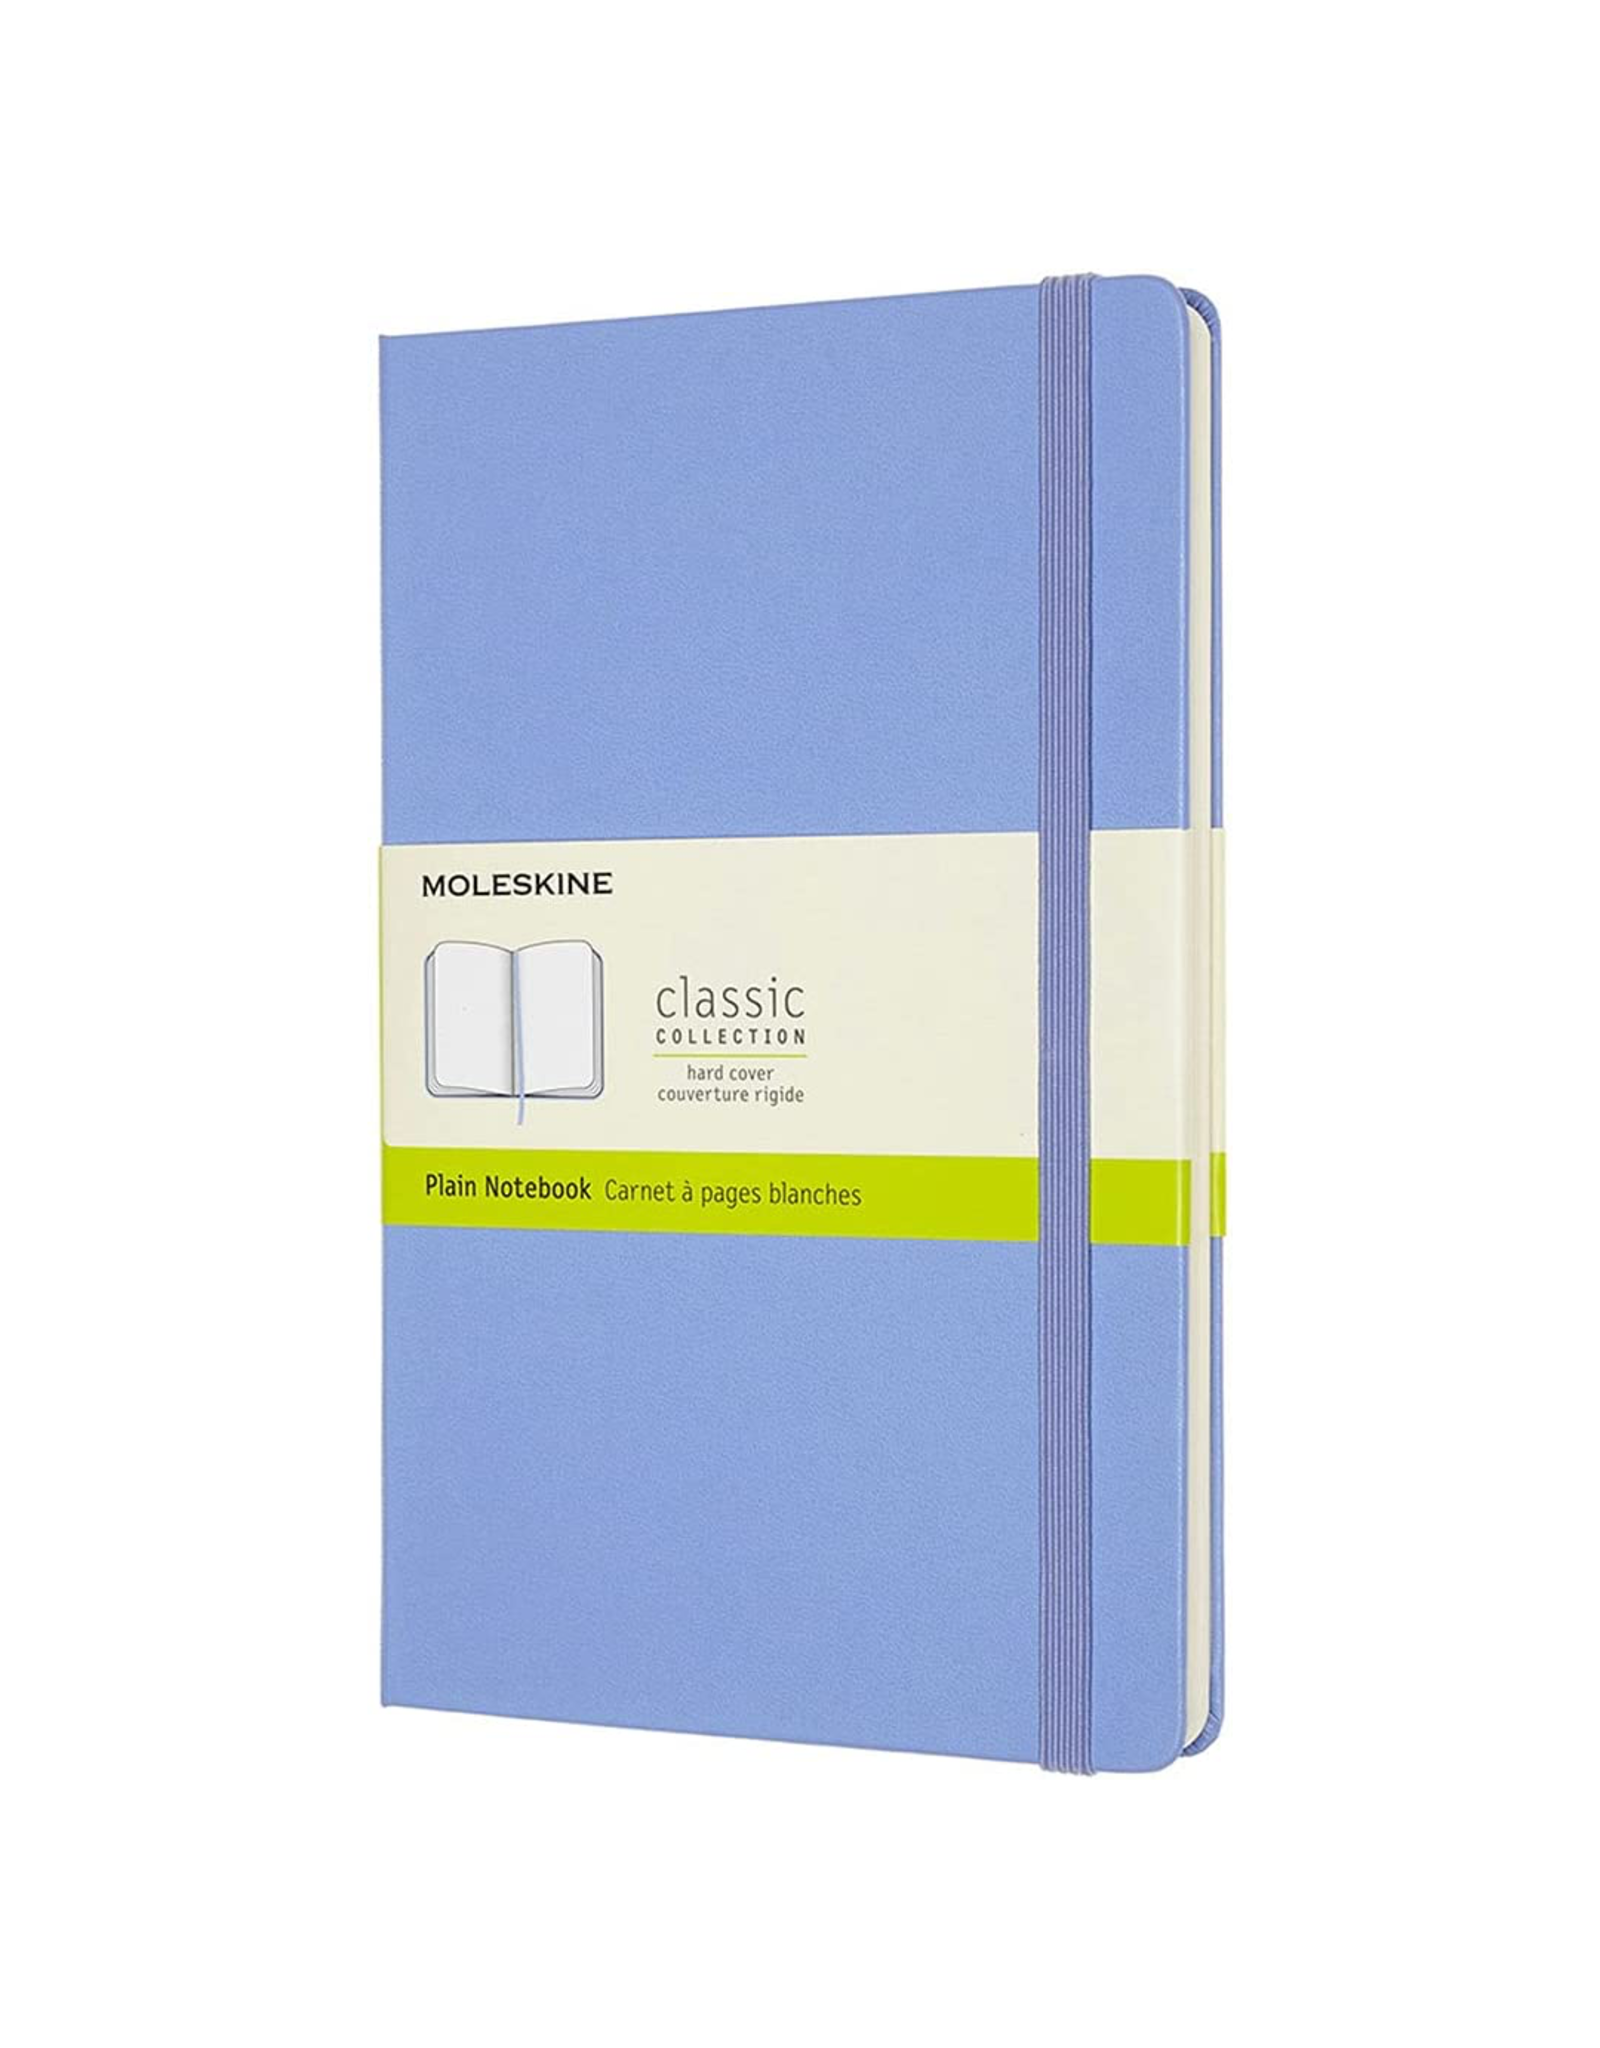 Moleskine Classic Notebook, Extra Large, Plain, Hydrangea Blue, Hard Cover